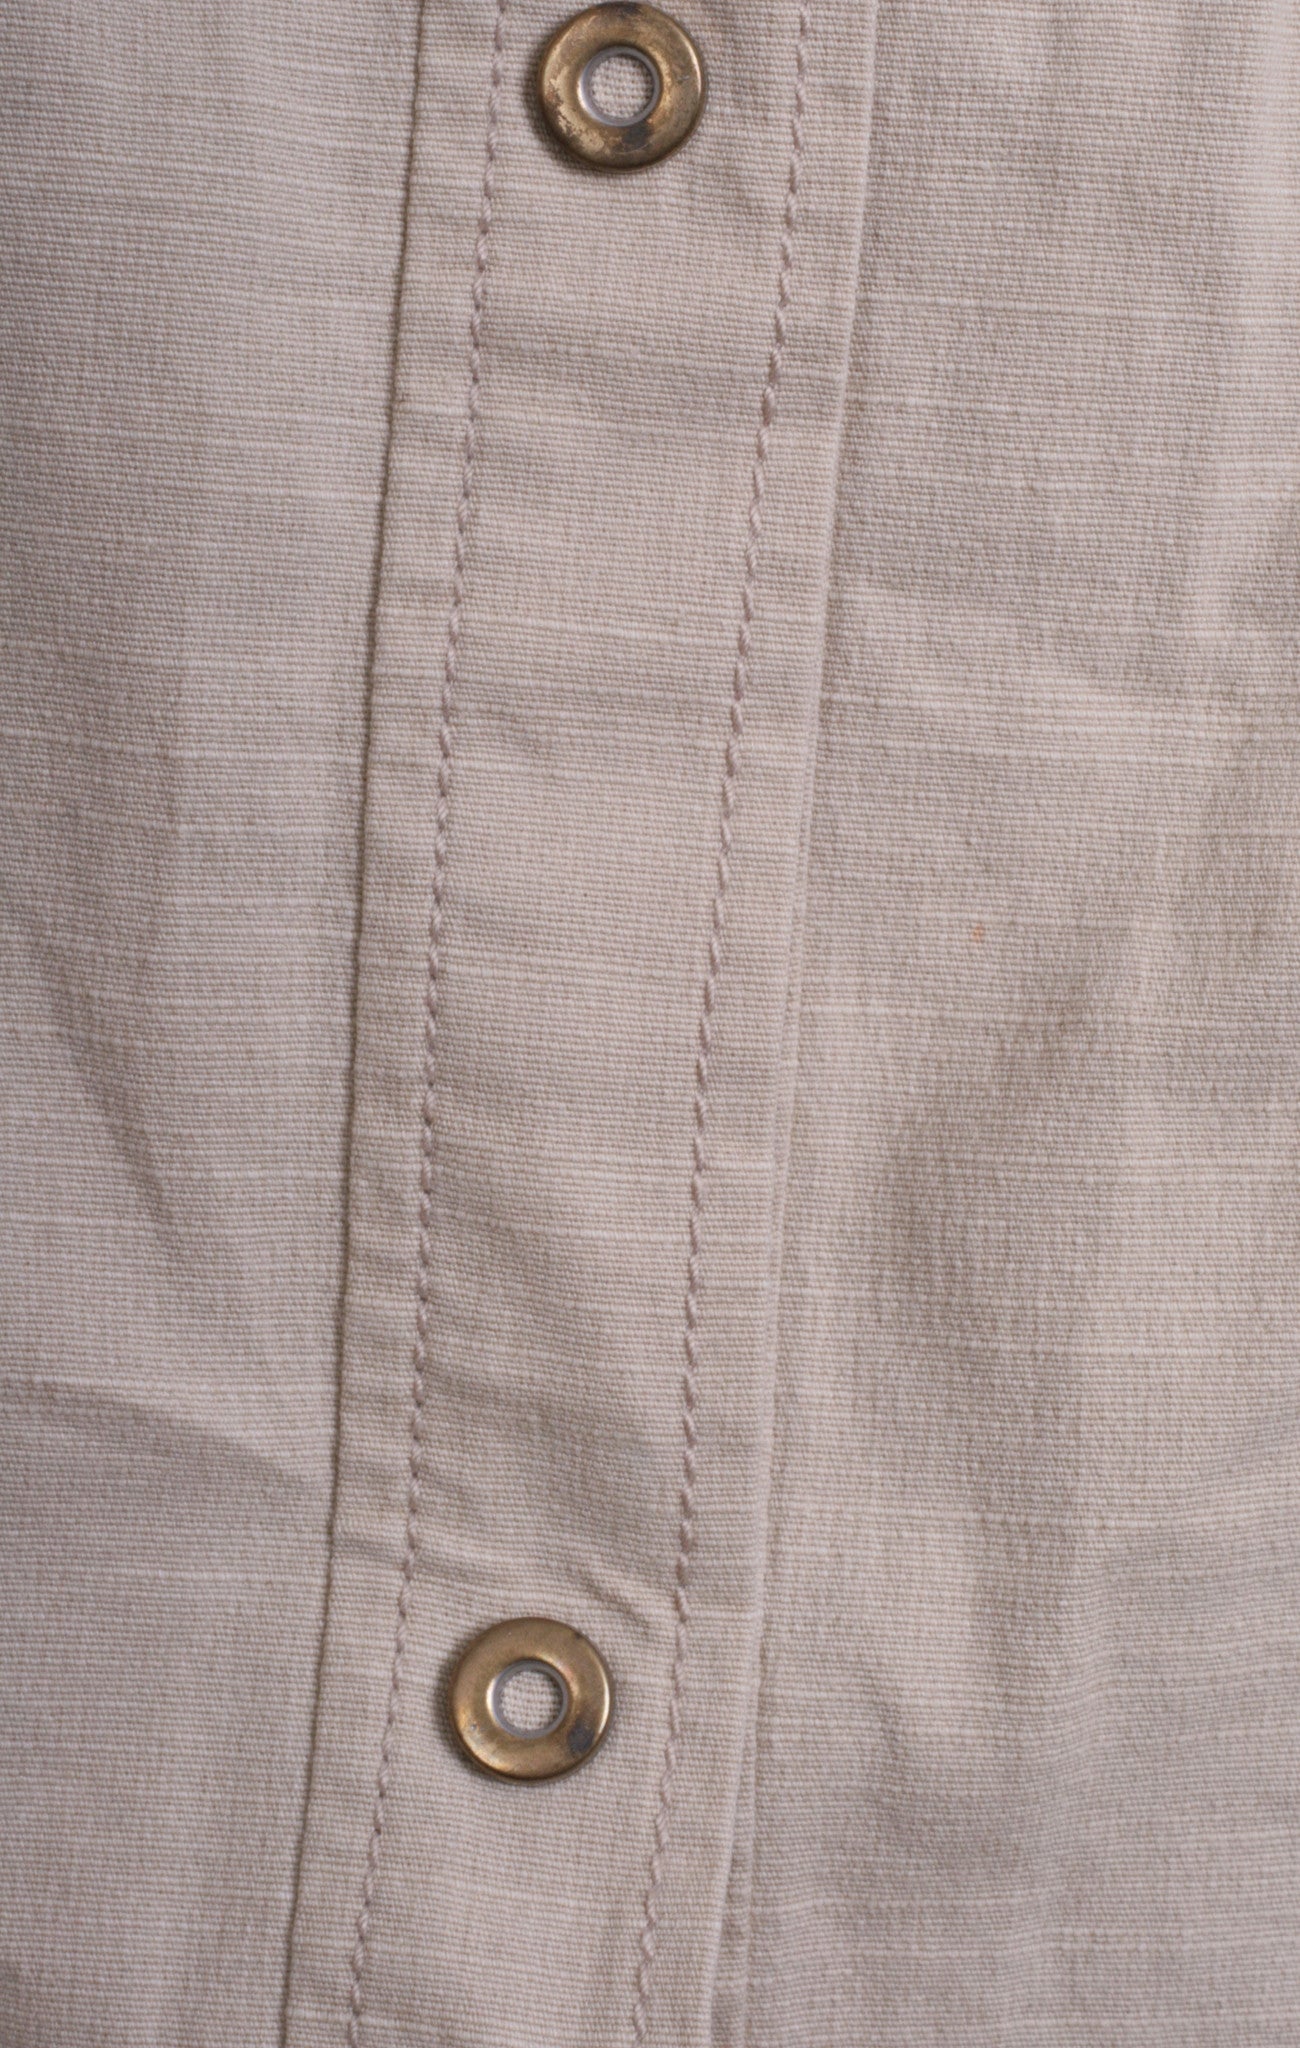 Gerry Weber Womens 38 M Casual Shirt Outdoor Cotton Top Beige - RetrospectClothes